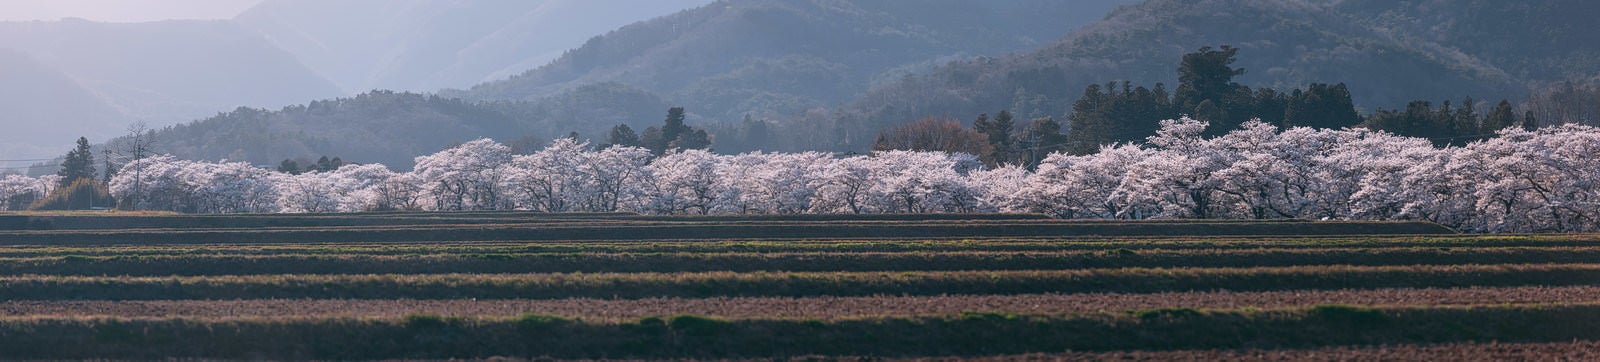 「3kmに渡る長大な笹原川の千本桜」の写真